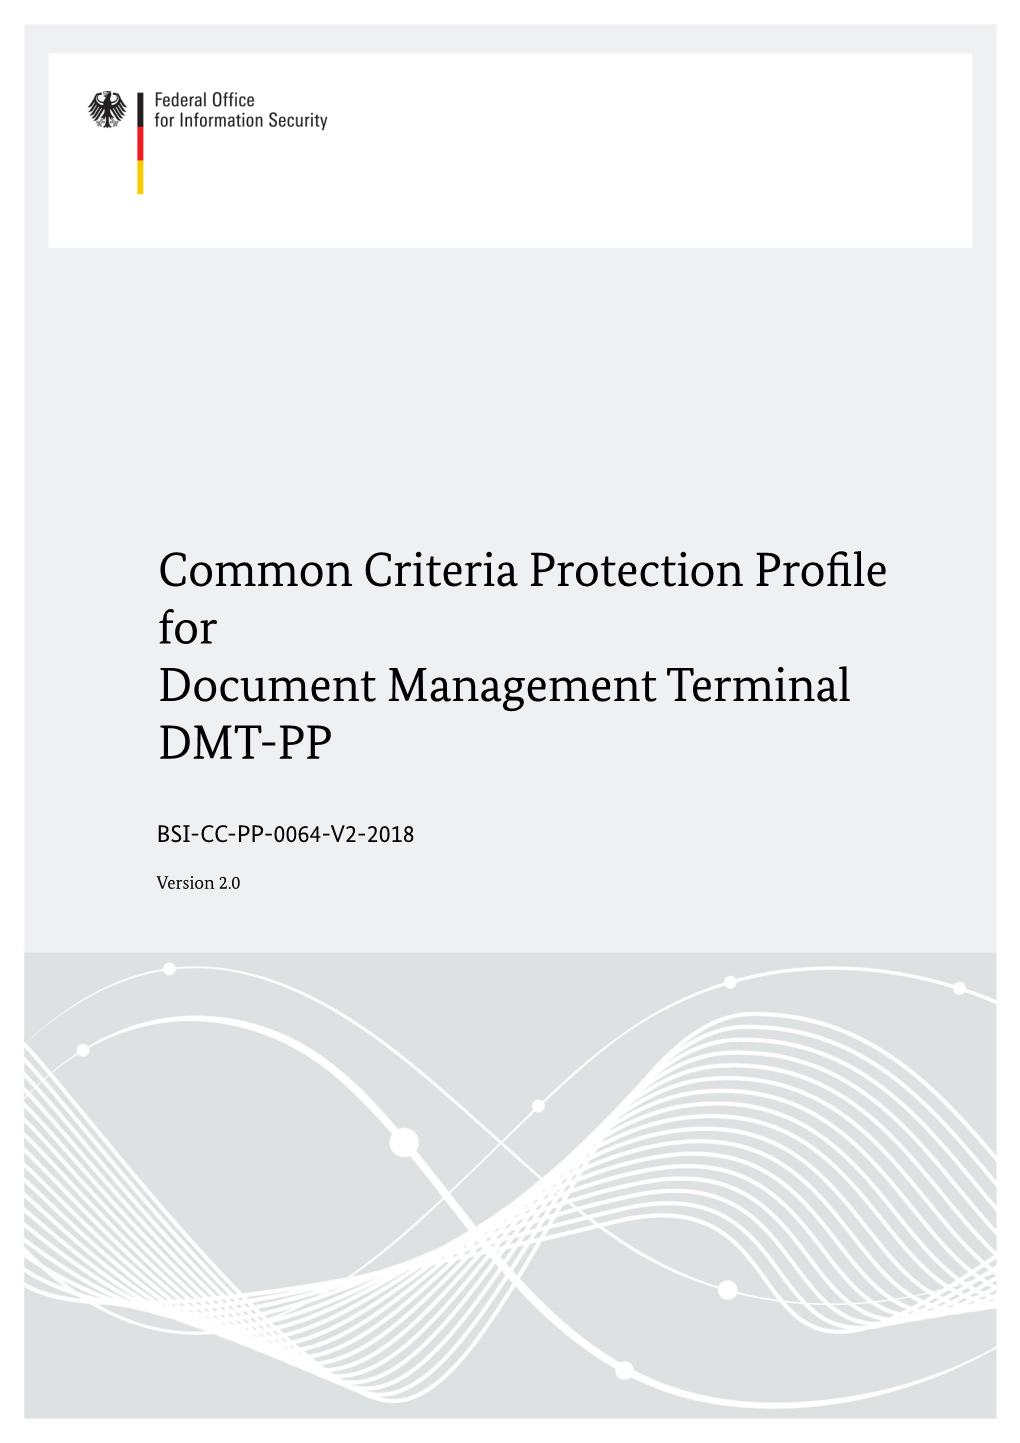 Common Criteria Protection Profile for Document Management Terminal DMT-PP